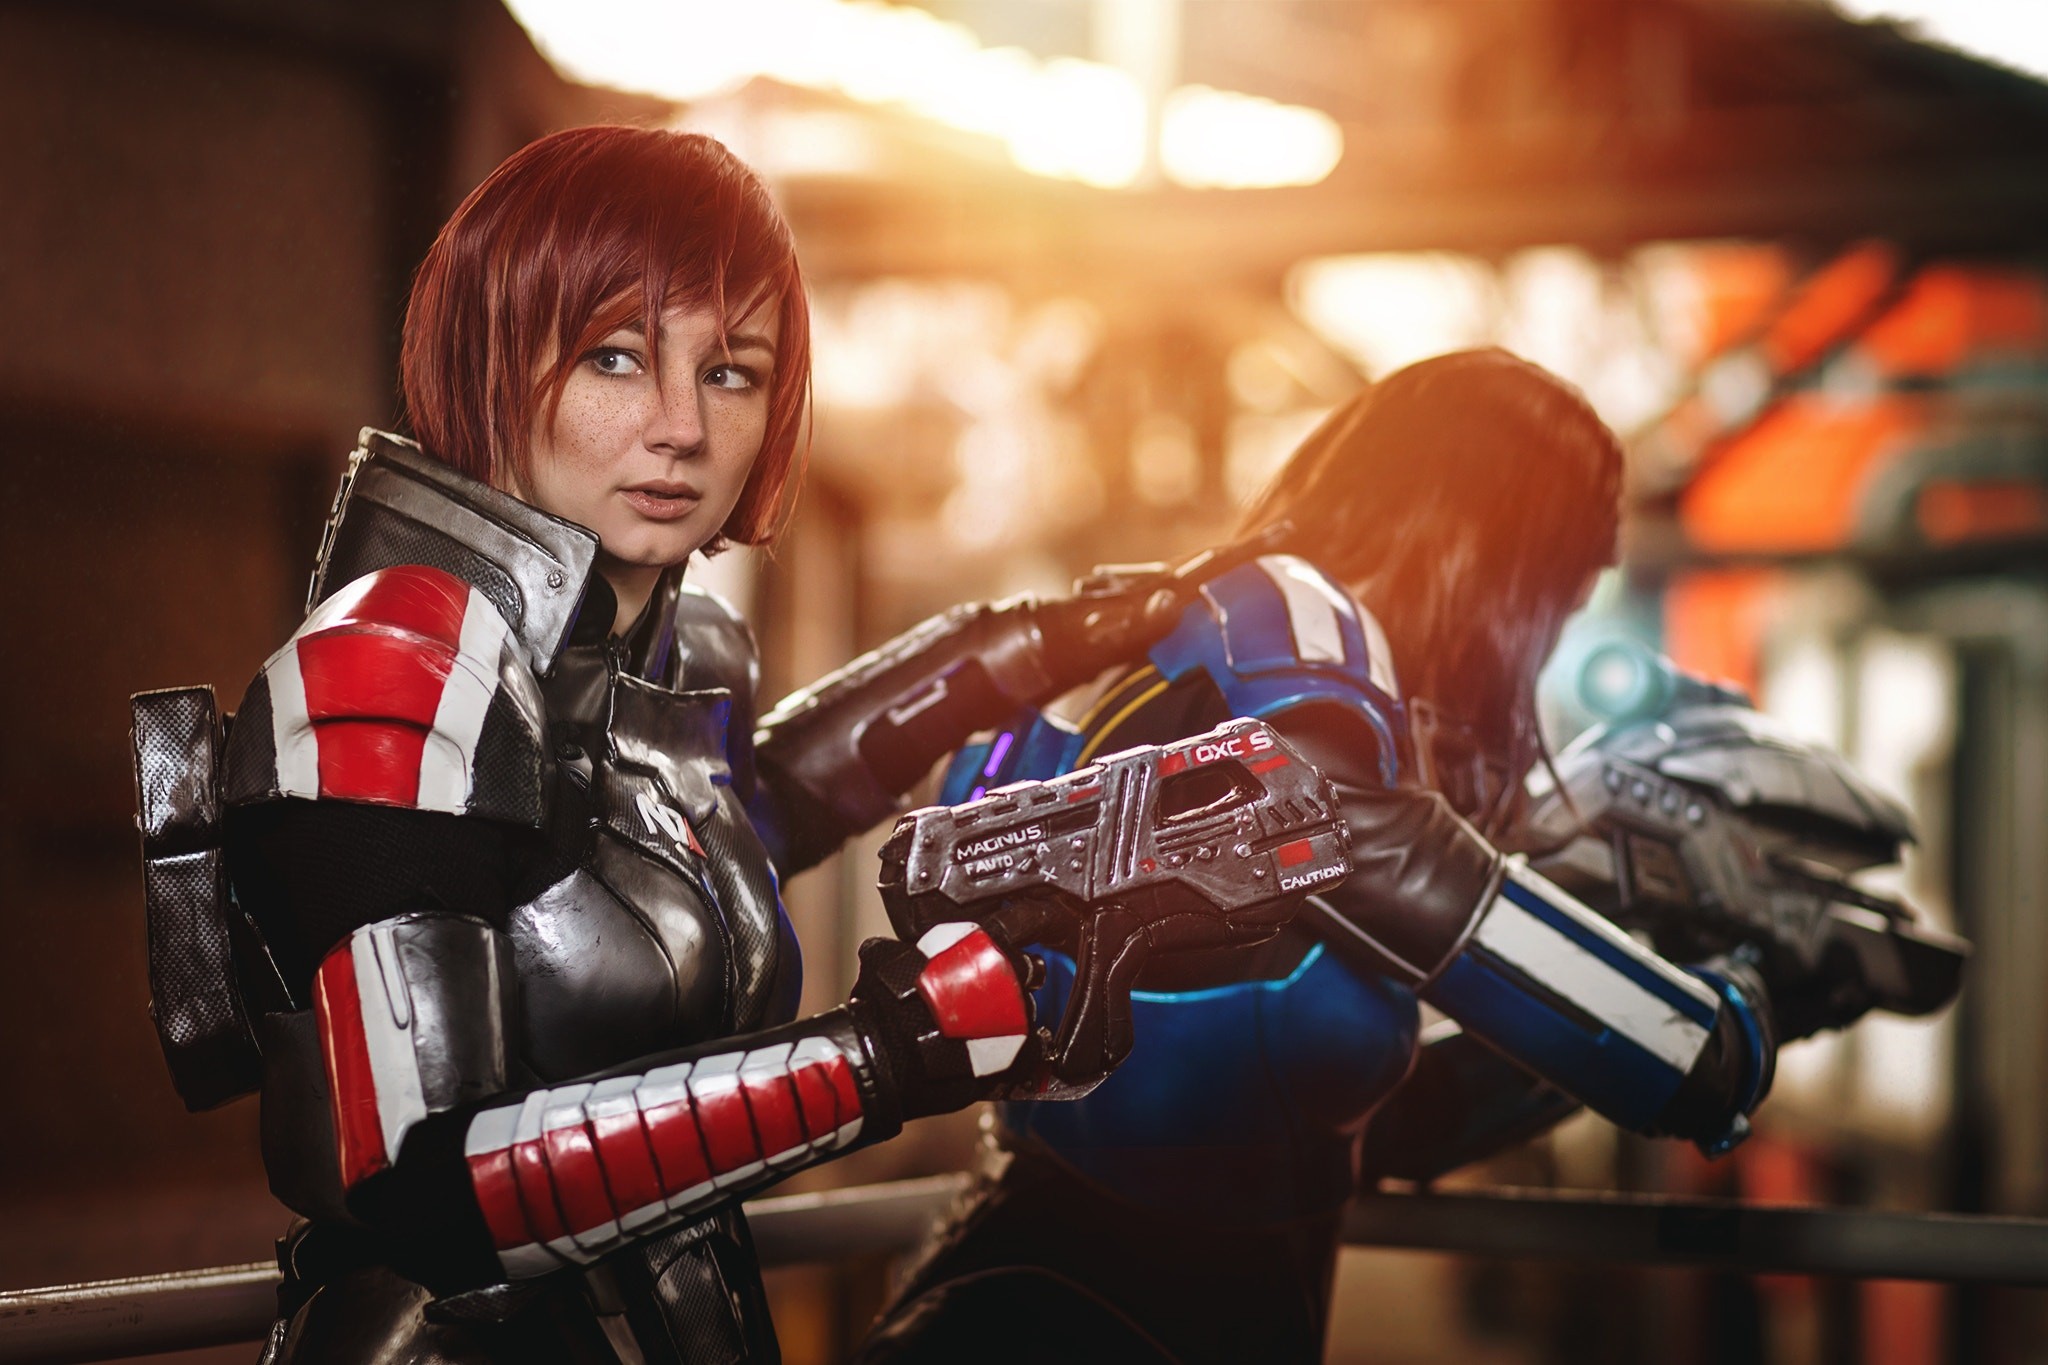 People 2048x1365 Kieran Kerrigan cosplay women 500px Mass Effect video games model armored woman Commander Shepard Jane Shepard girl in armor Ashley Williams